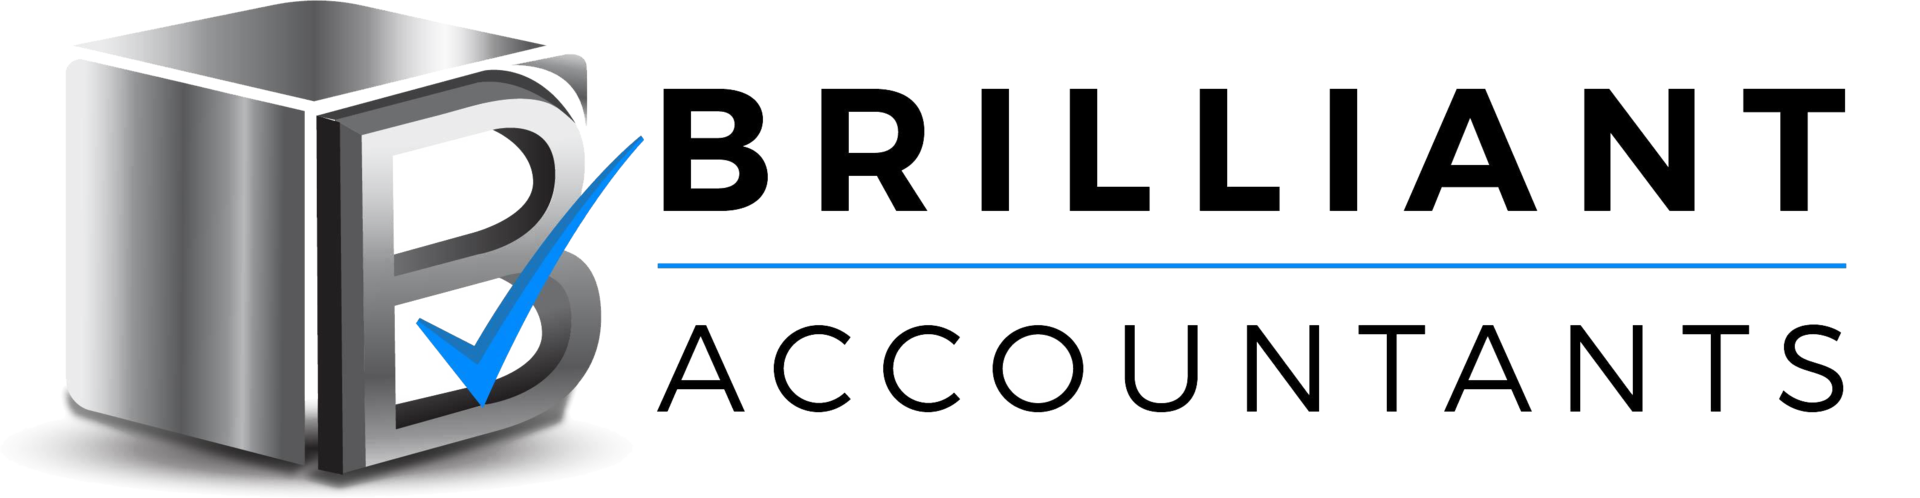 Brilliant Accountants Logo